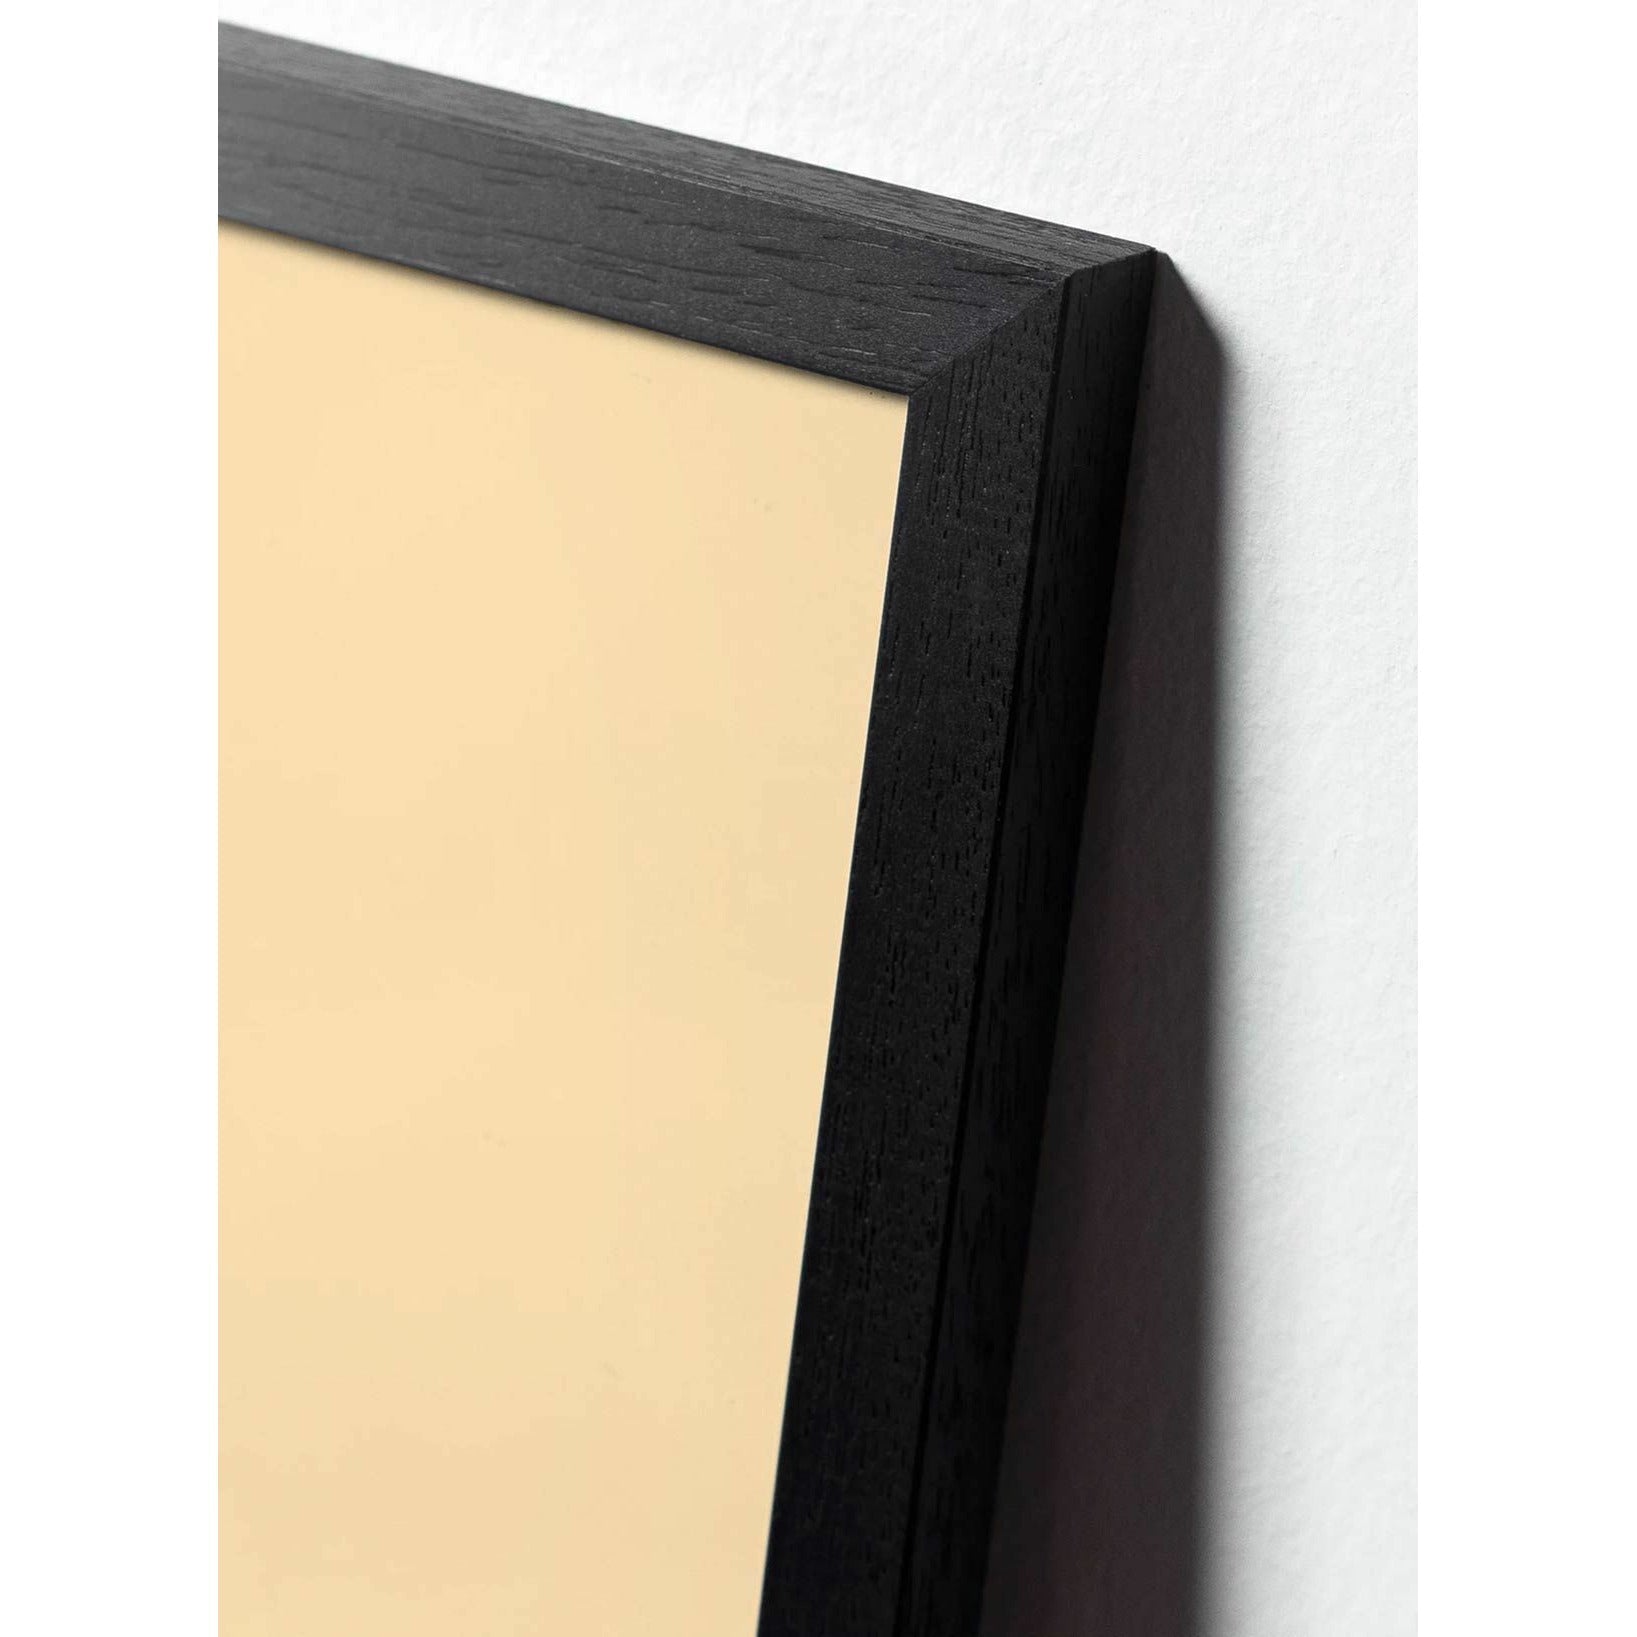 Póster de icono de diseño de creación, marco hecho de madera lacada negra 50x70 cm, gris